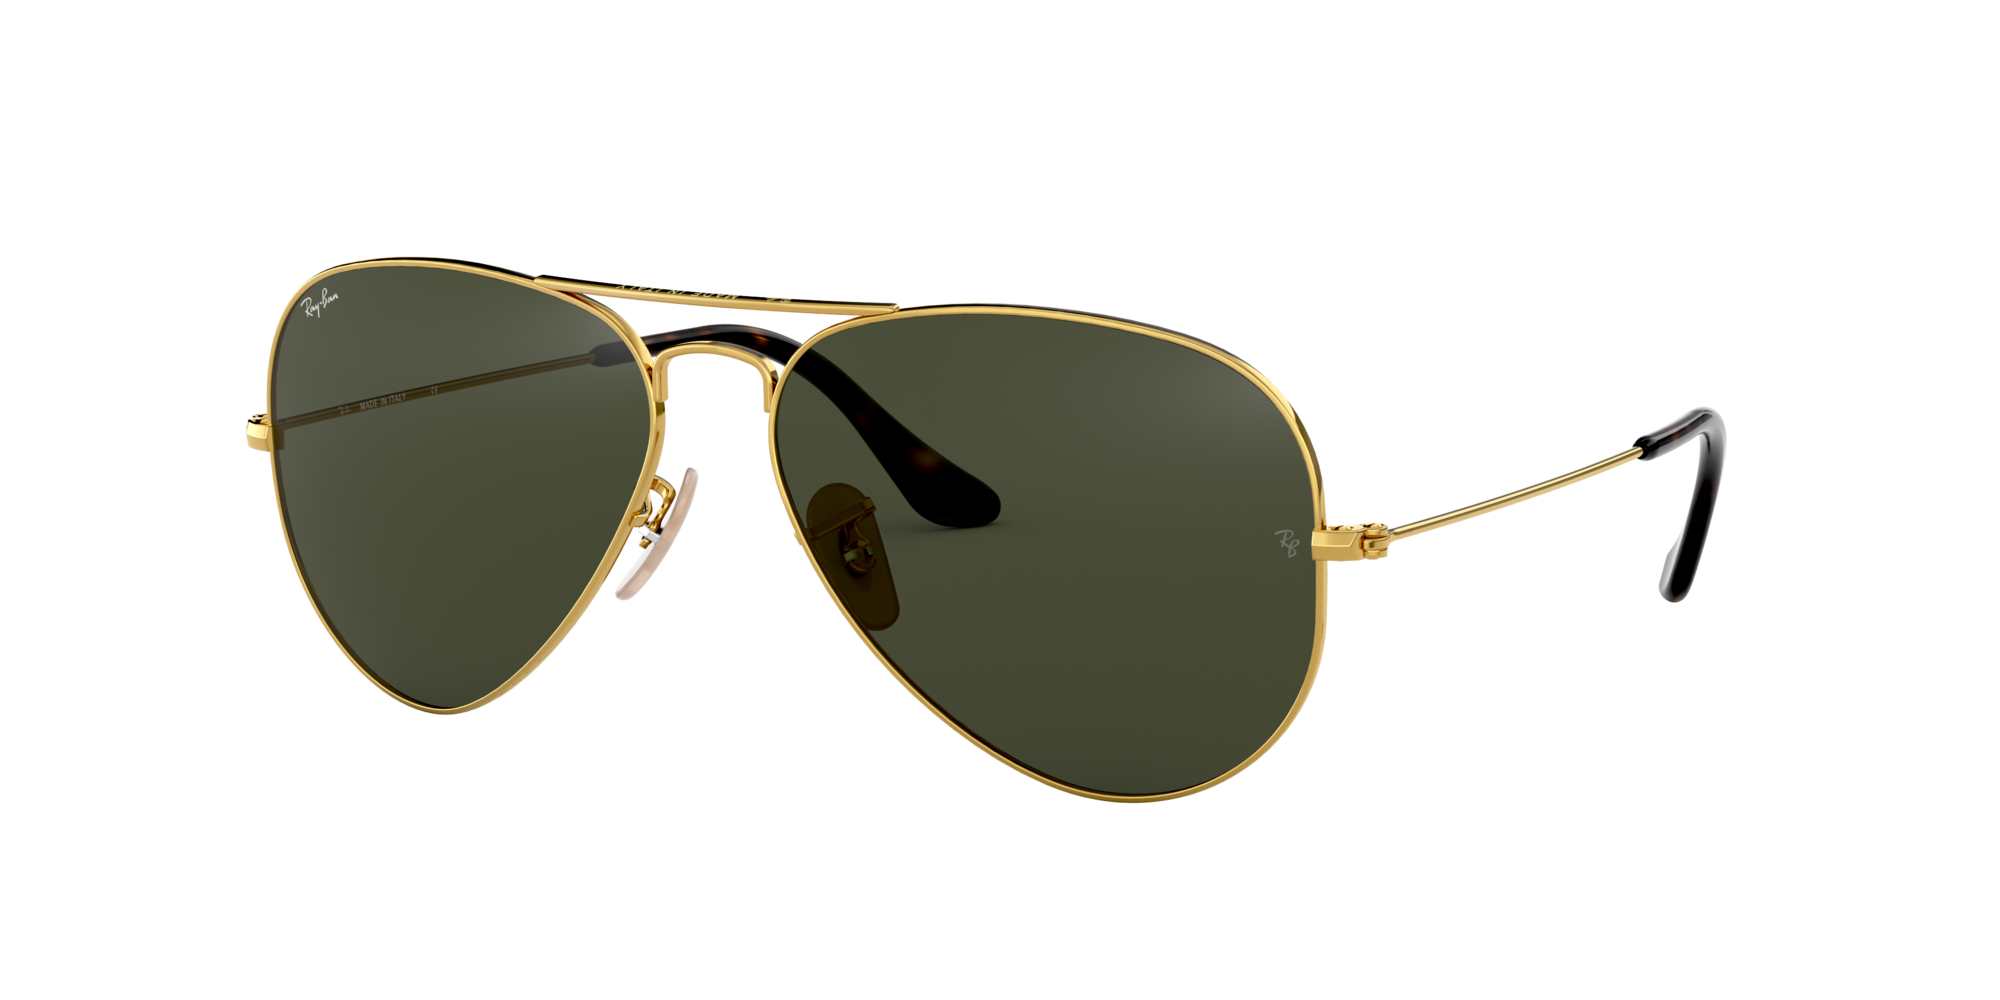 Verlichting ernstig vacature RB3025 58 ORIGINAL AVIATOR: Shop Ray-Ban Gold Pilot Sunglasses at  LensCrafters